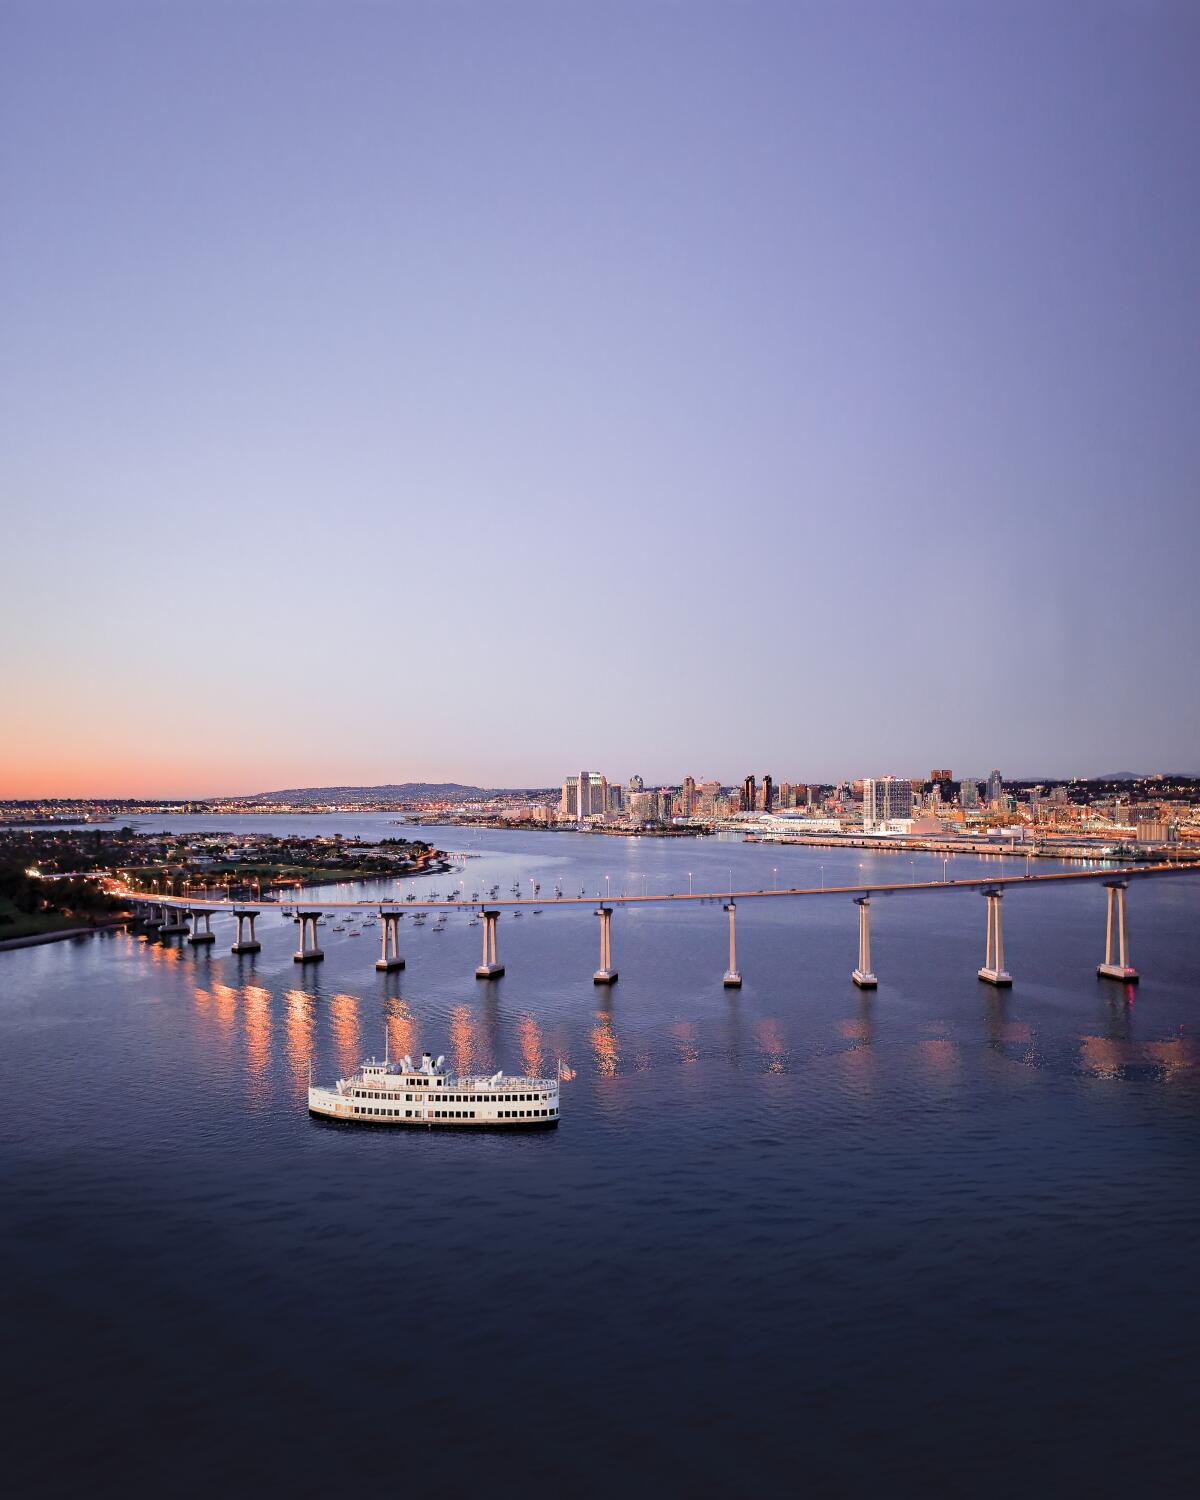 A Hornblower Cruises boat passes the Coronado Bridge in San Diego Harbor